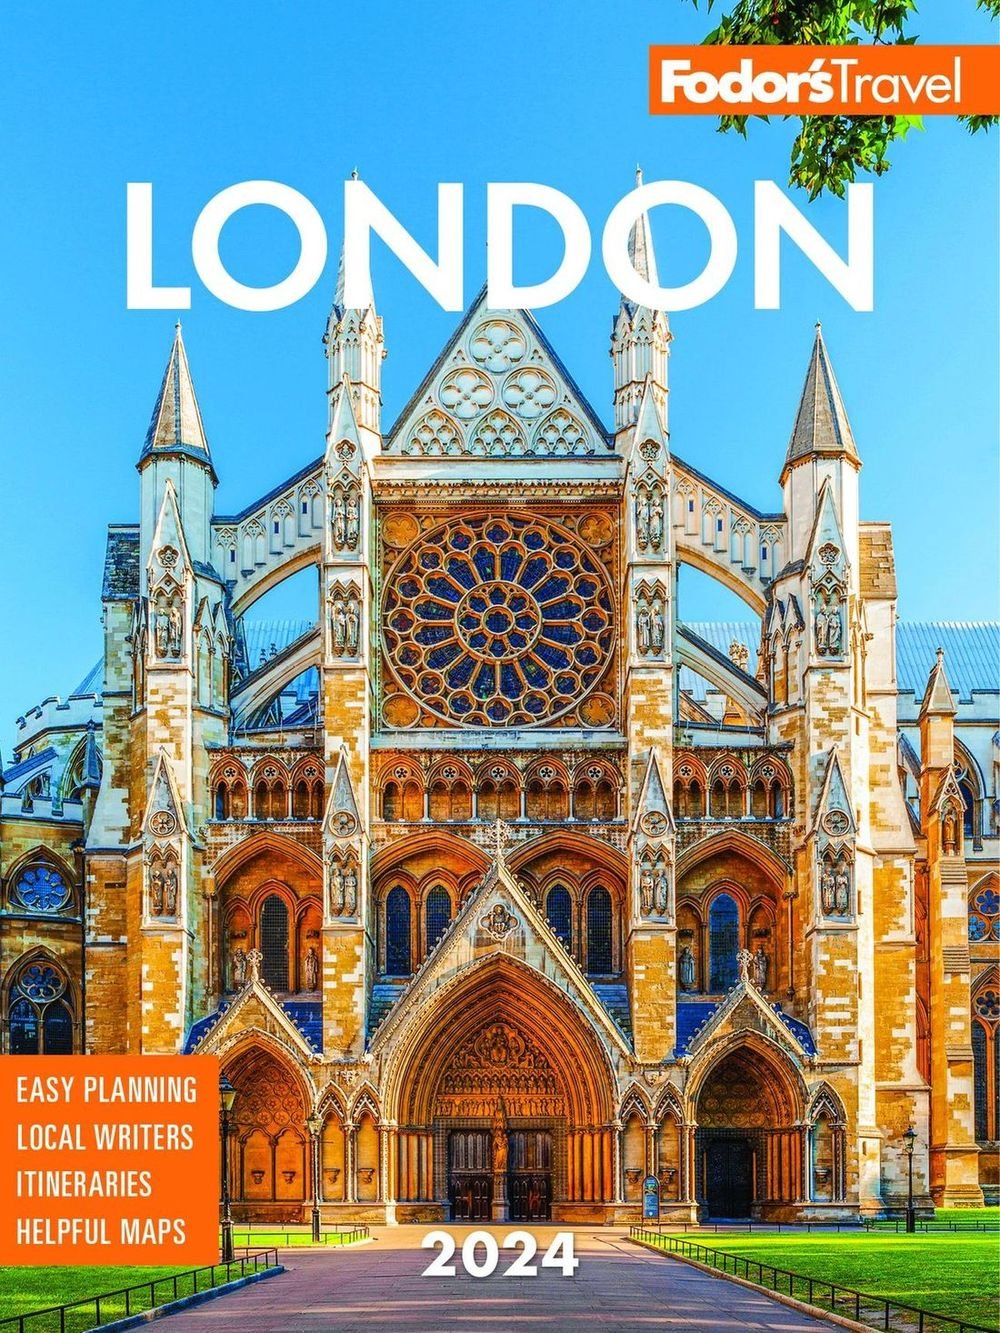 Fodor's London 2024 (Fullcolor Travel Guide), 37th Edition SoftArchive